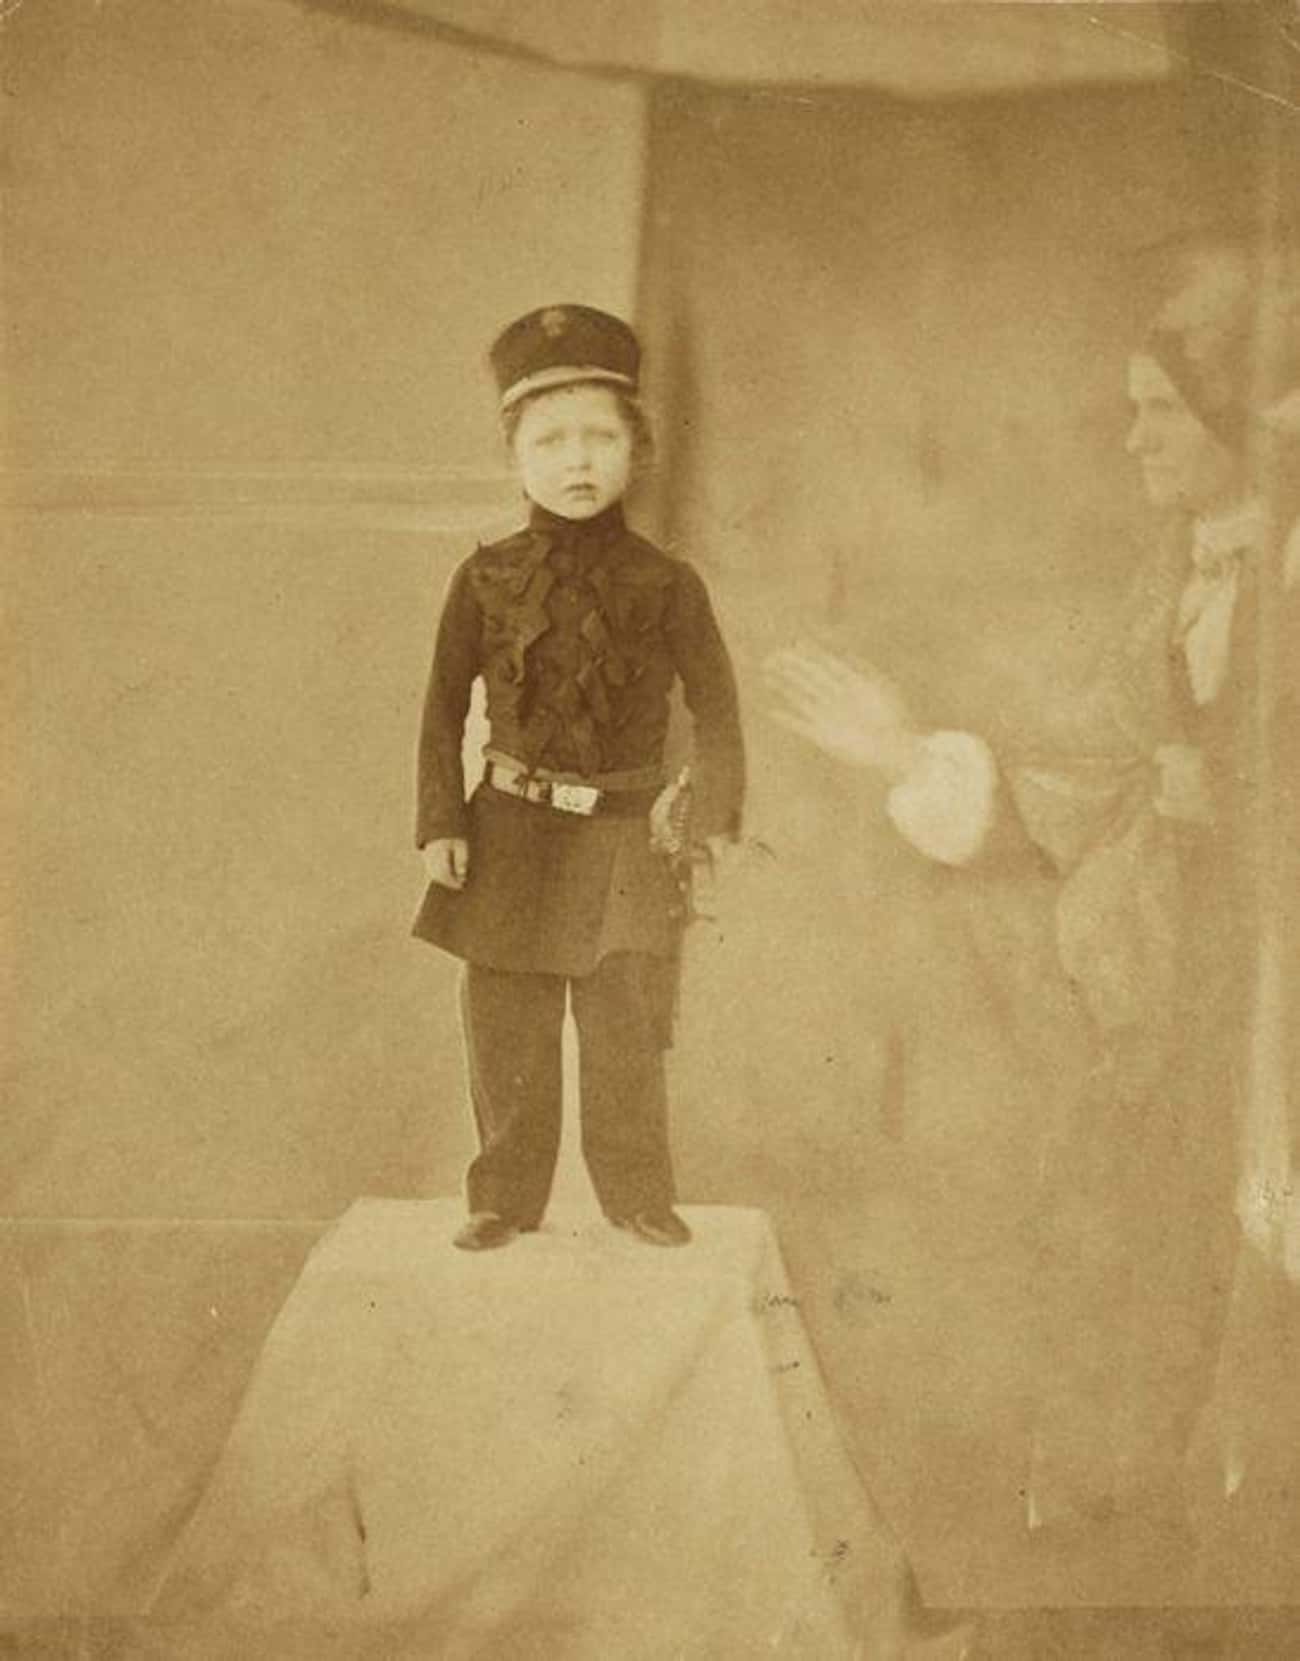 Prince Arthur And A Ghost - 1854